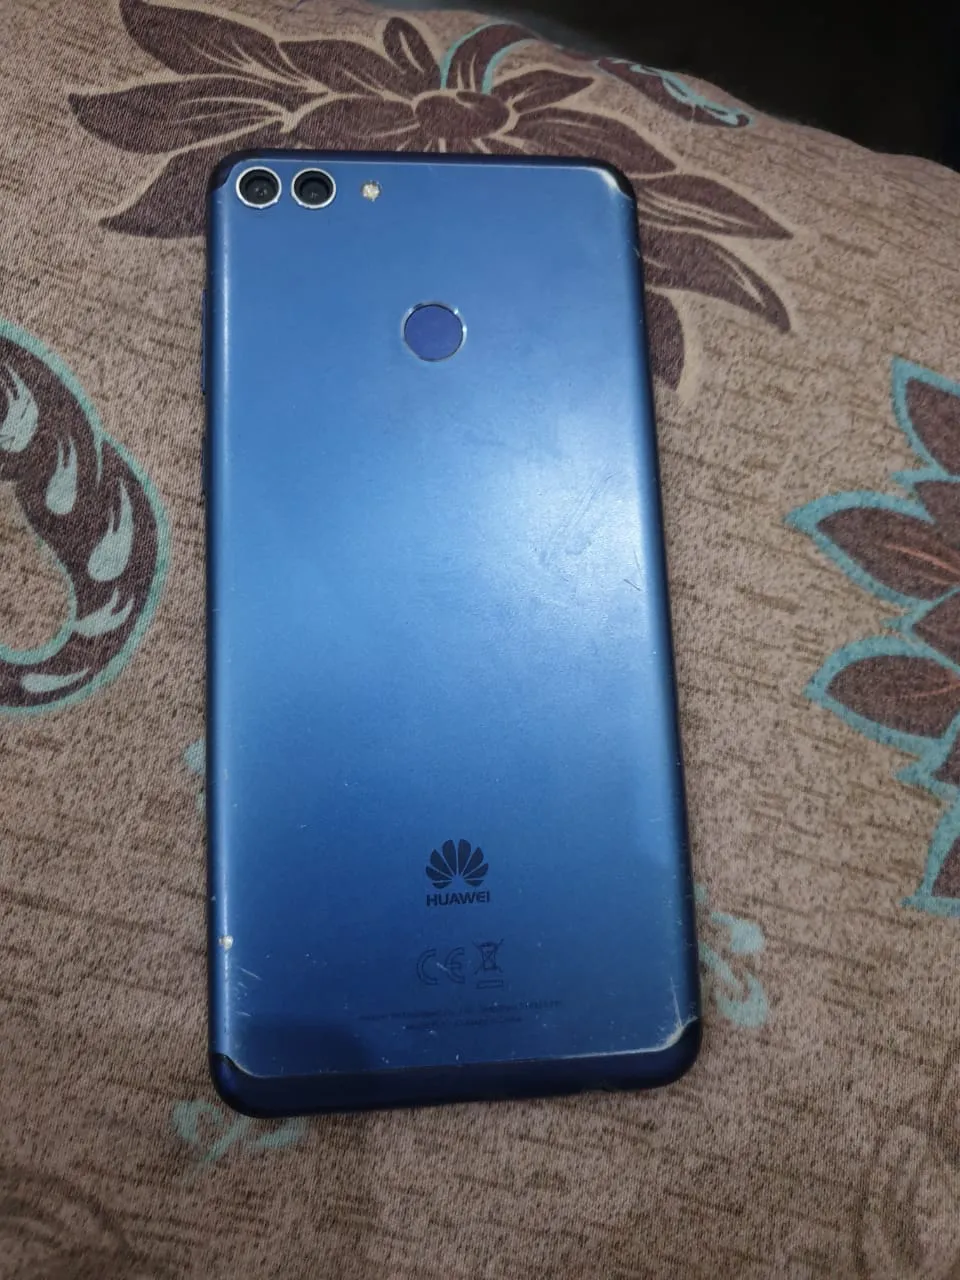 Huawei y9 2018 fingerprint chip tooti ha - photo 1